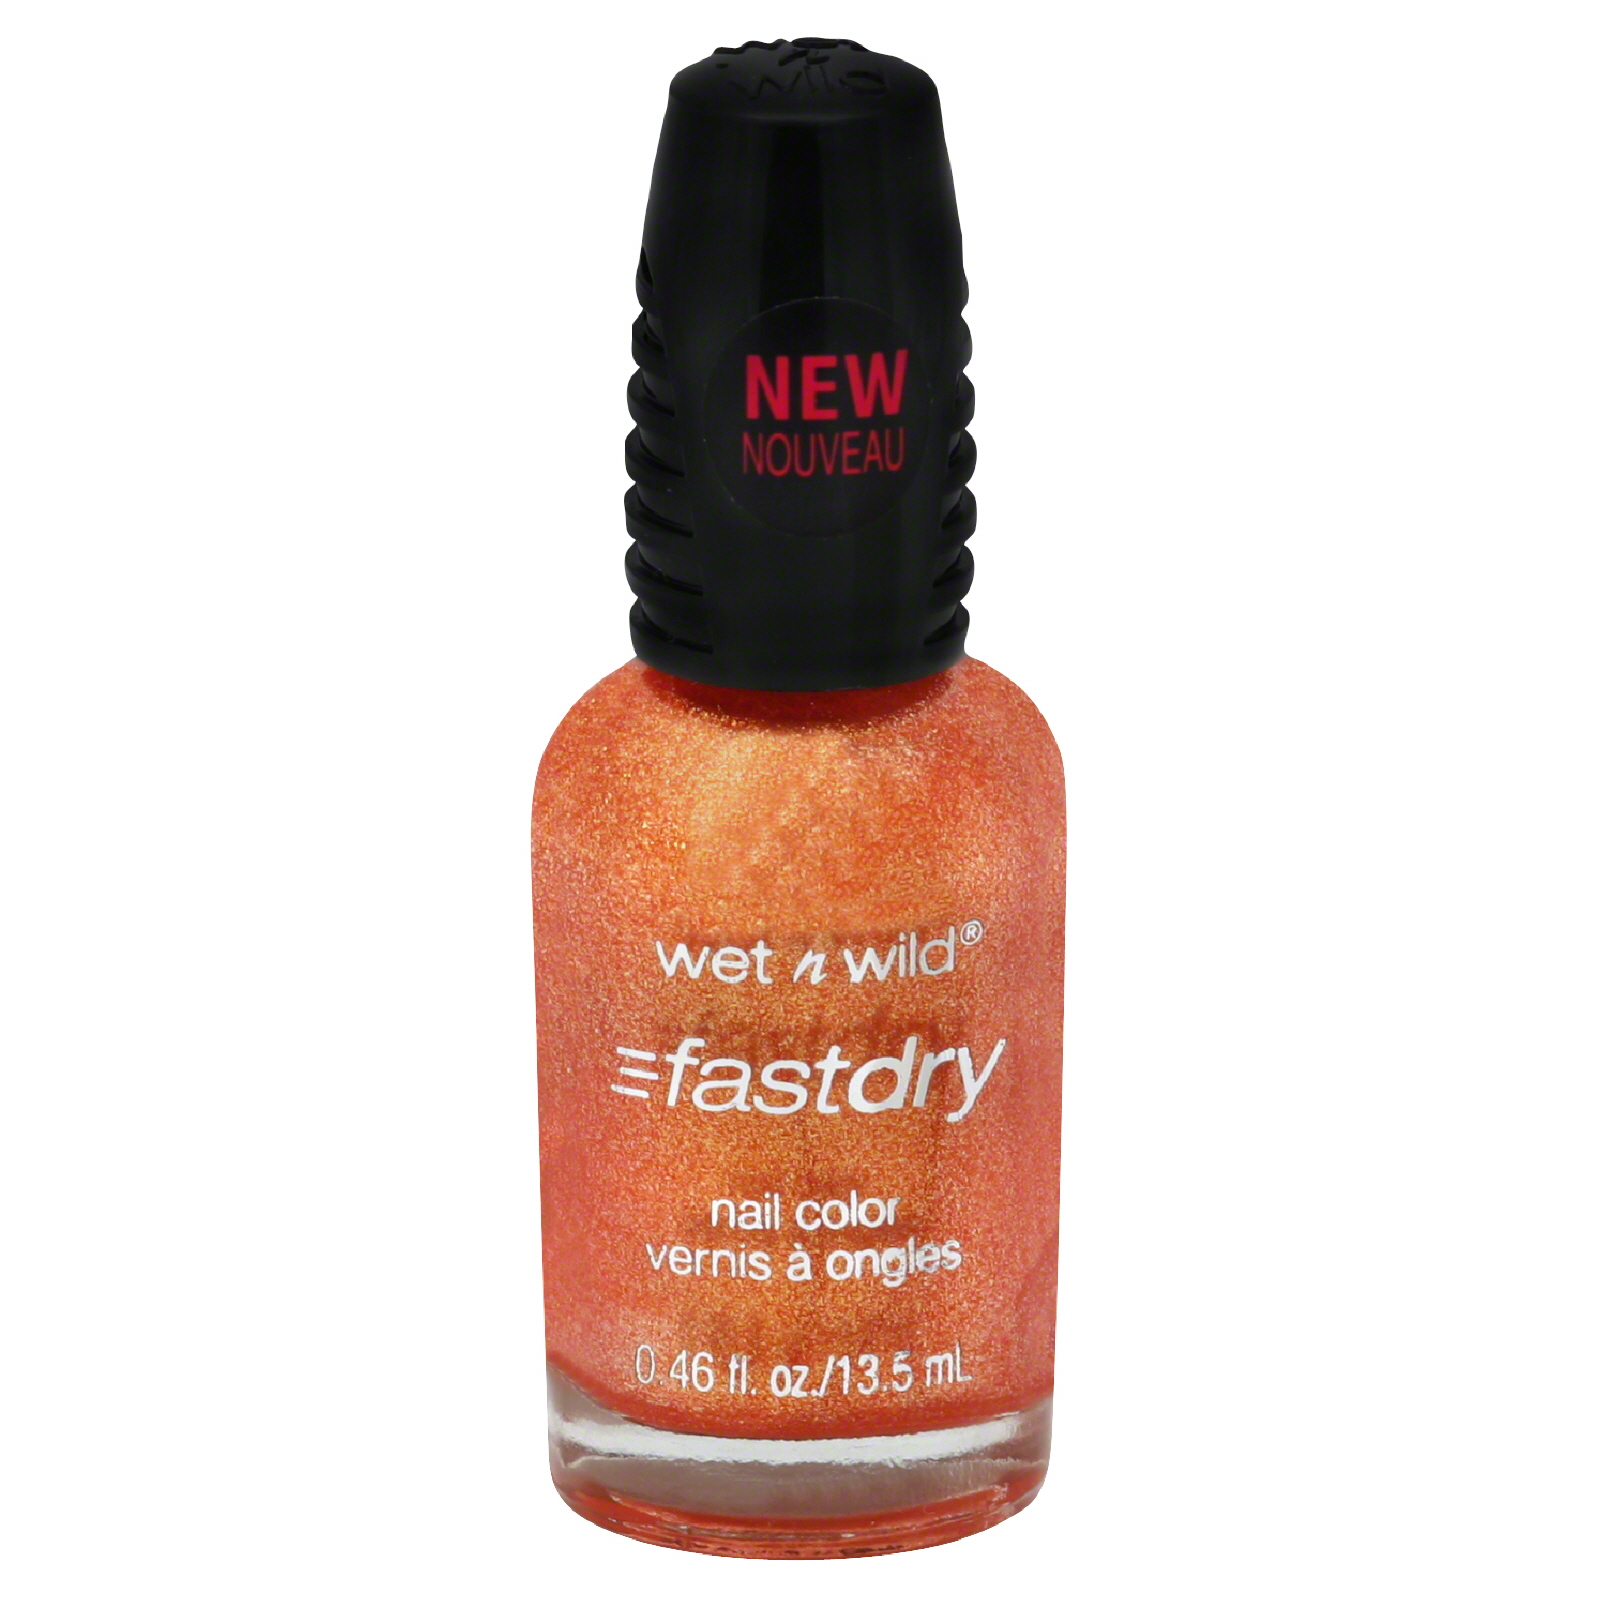 Wet n Wild Fast Dry Nail Color, 9.0.2.1. Orange 222C, 0.46 fl oz (13.5 ml)